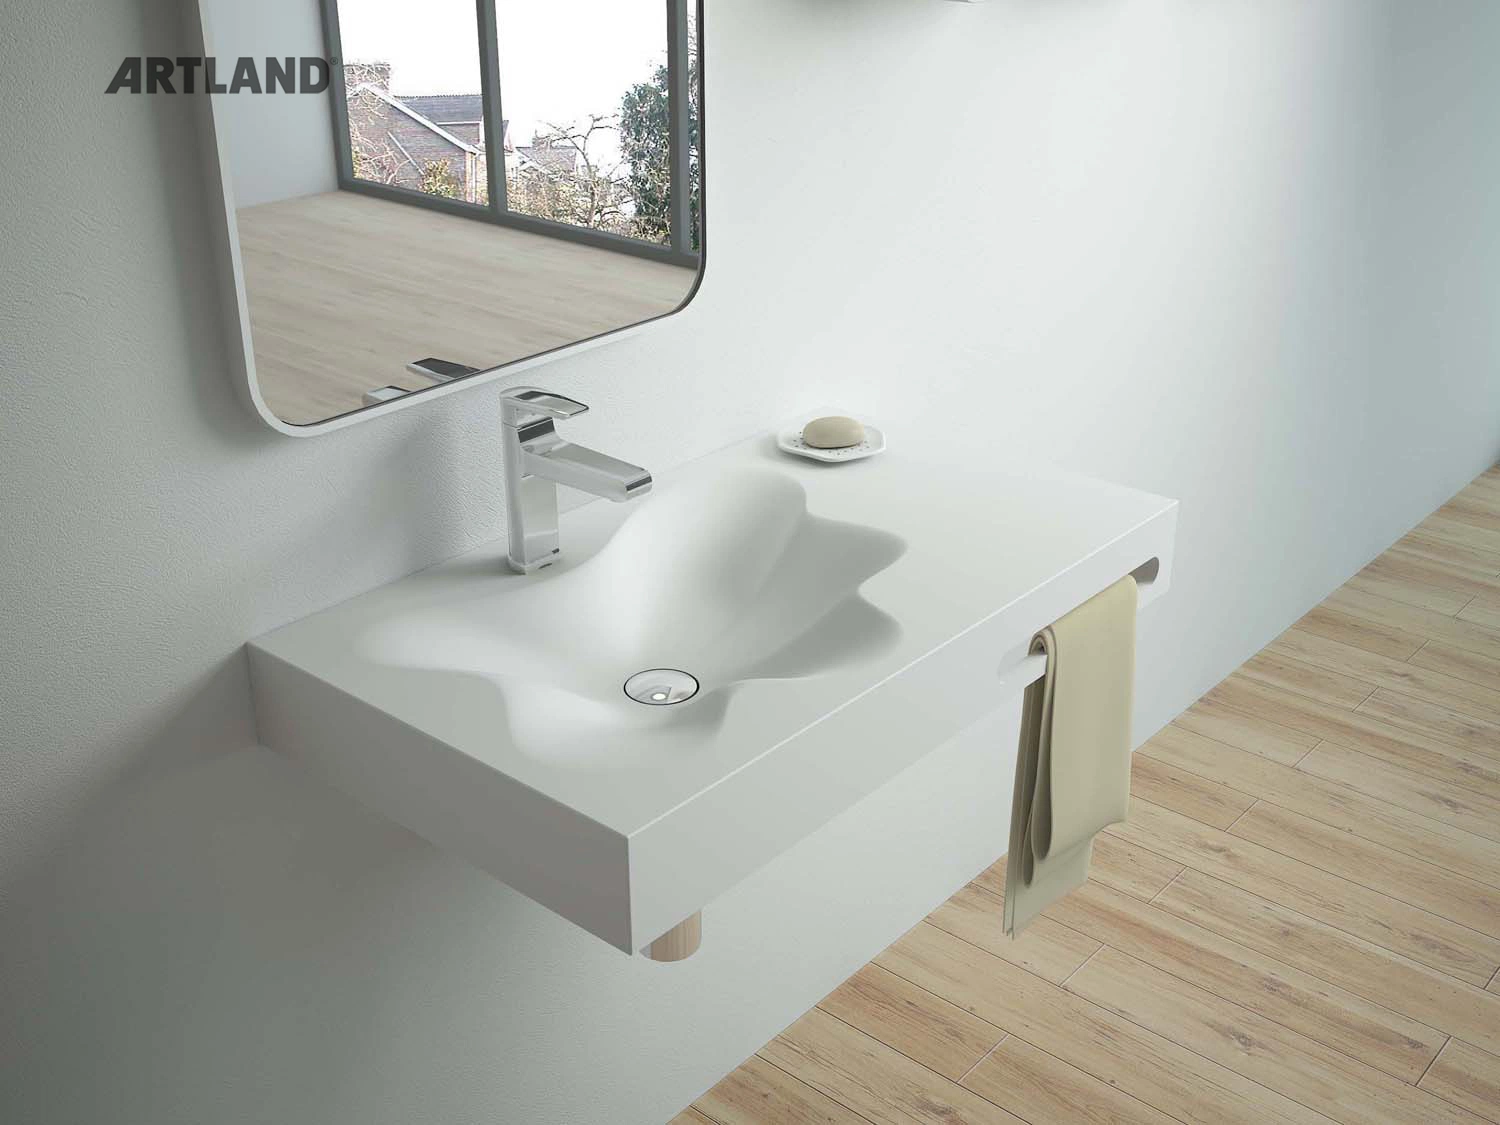 New Design Wholesale/Supplier Price Polishing Bathroom Sink Ceramics Wash Basin Sink